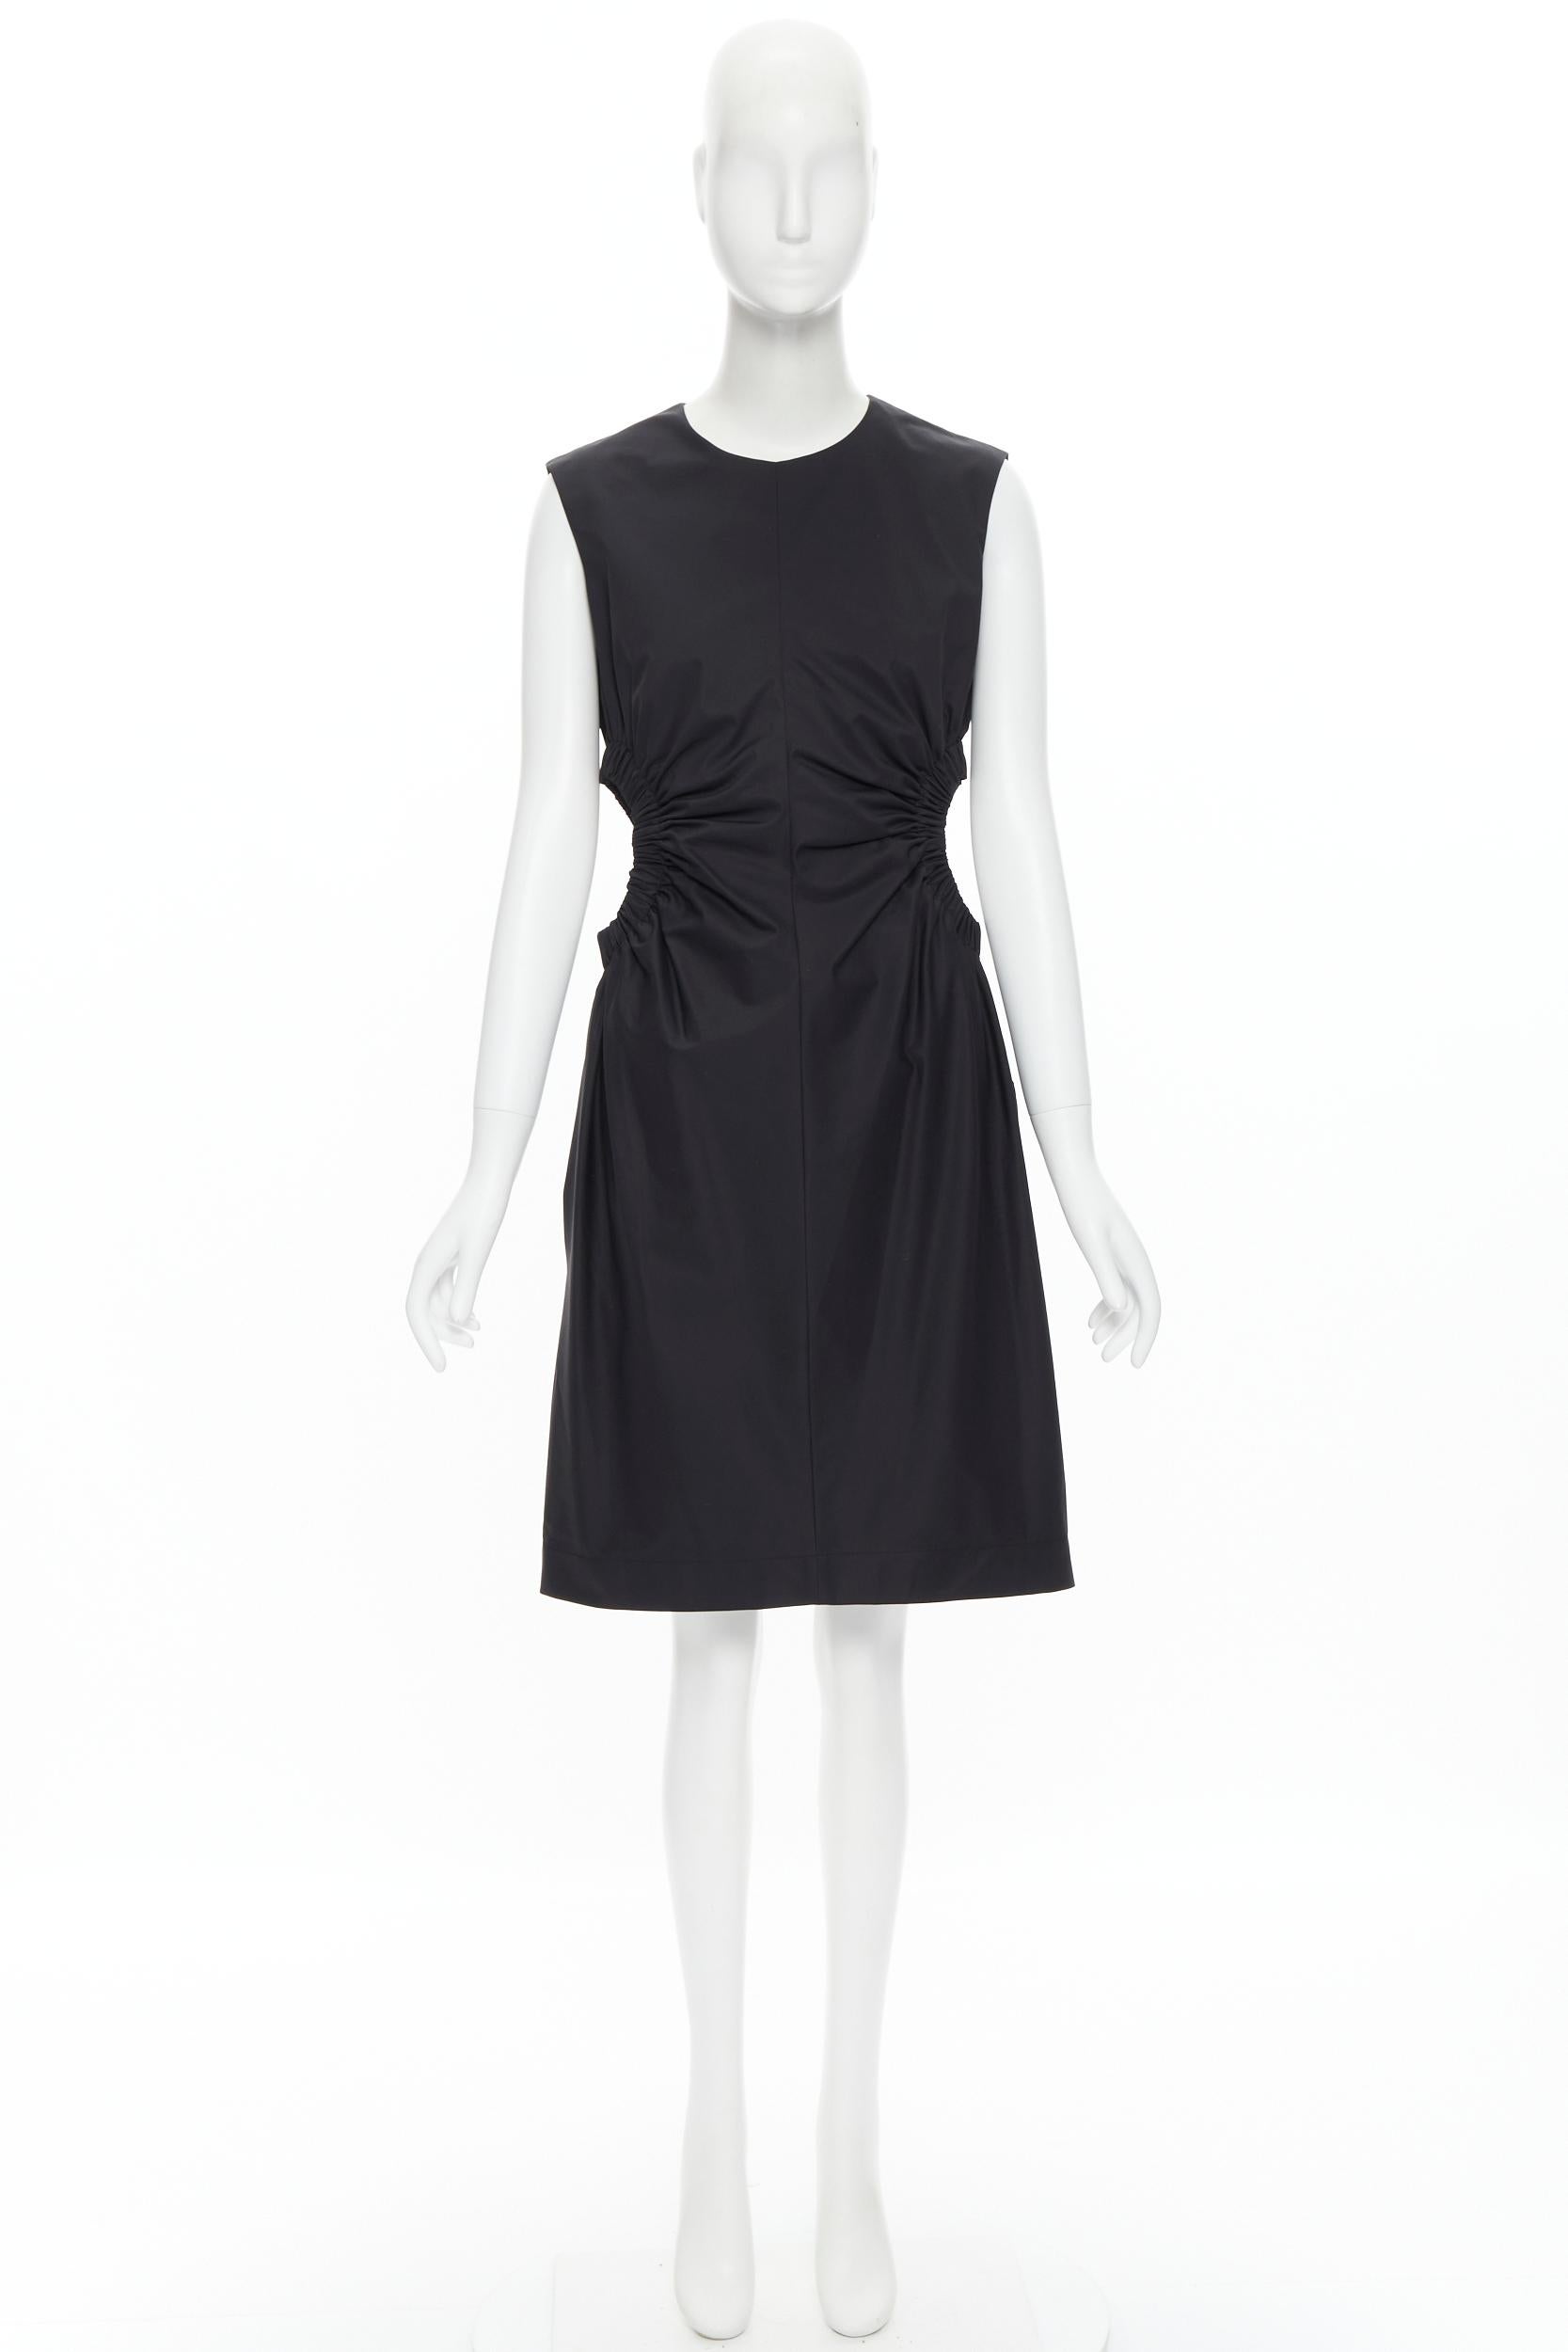 OLD CELINE Phoebe Philo Runway black circle cut out waist dress FR36 S 3